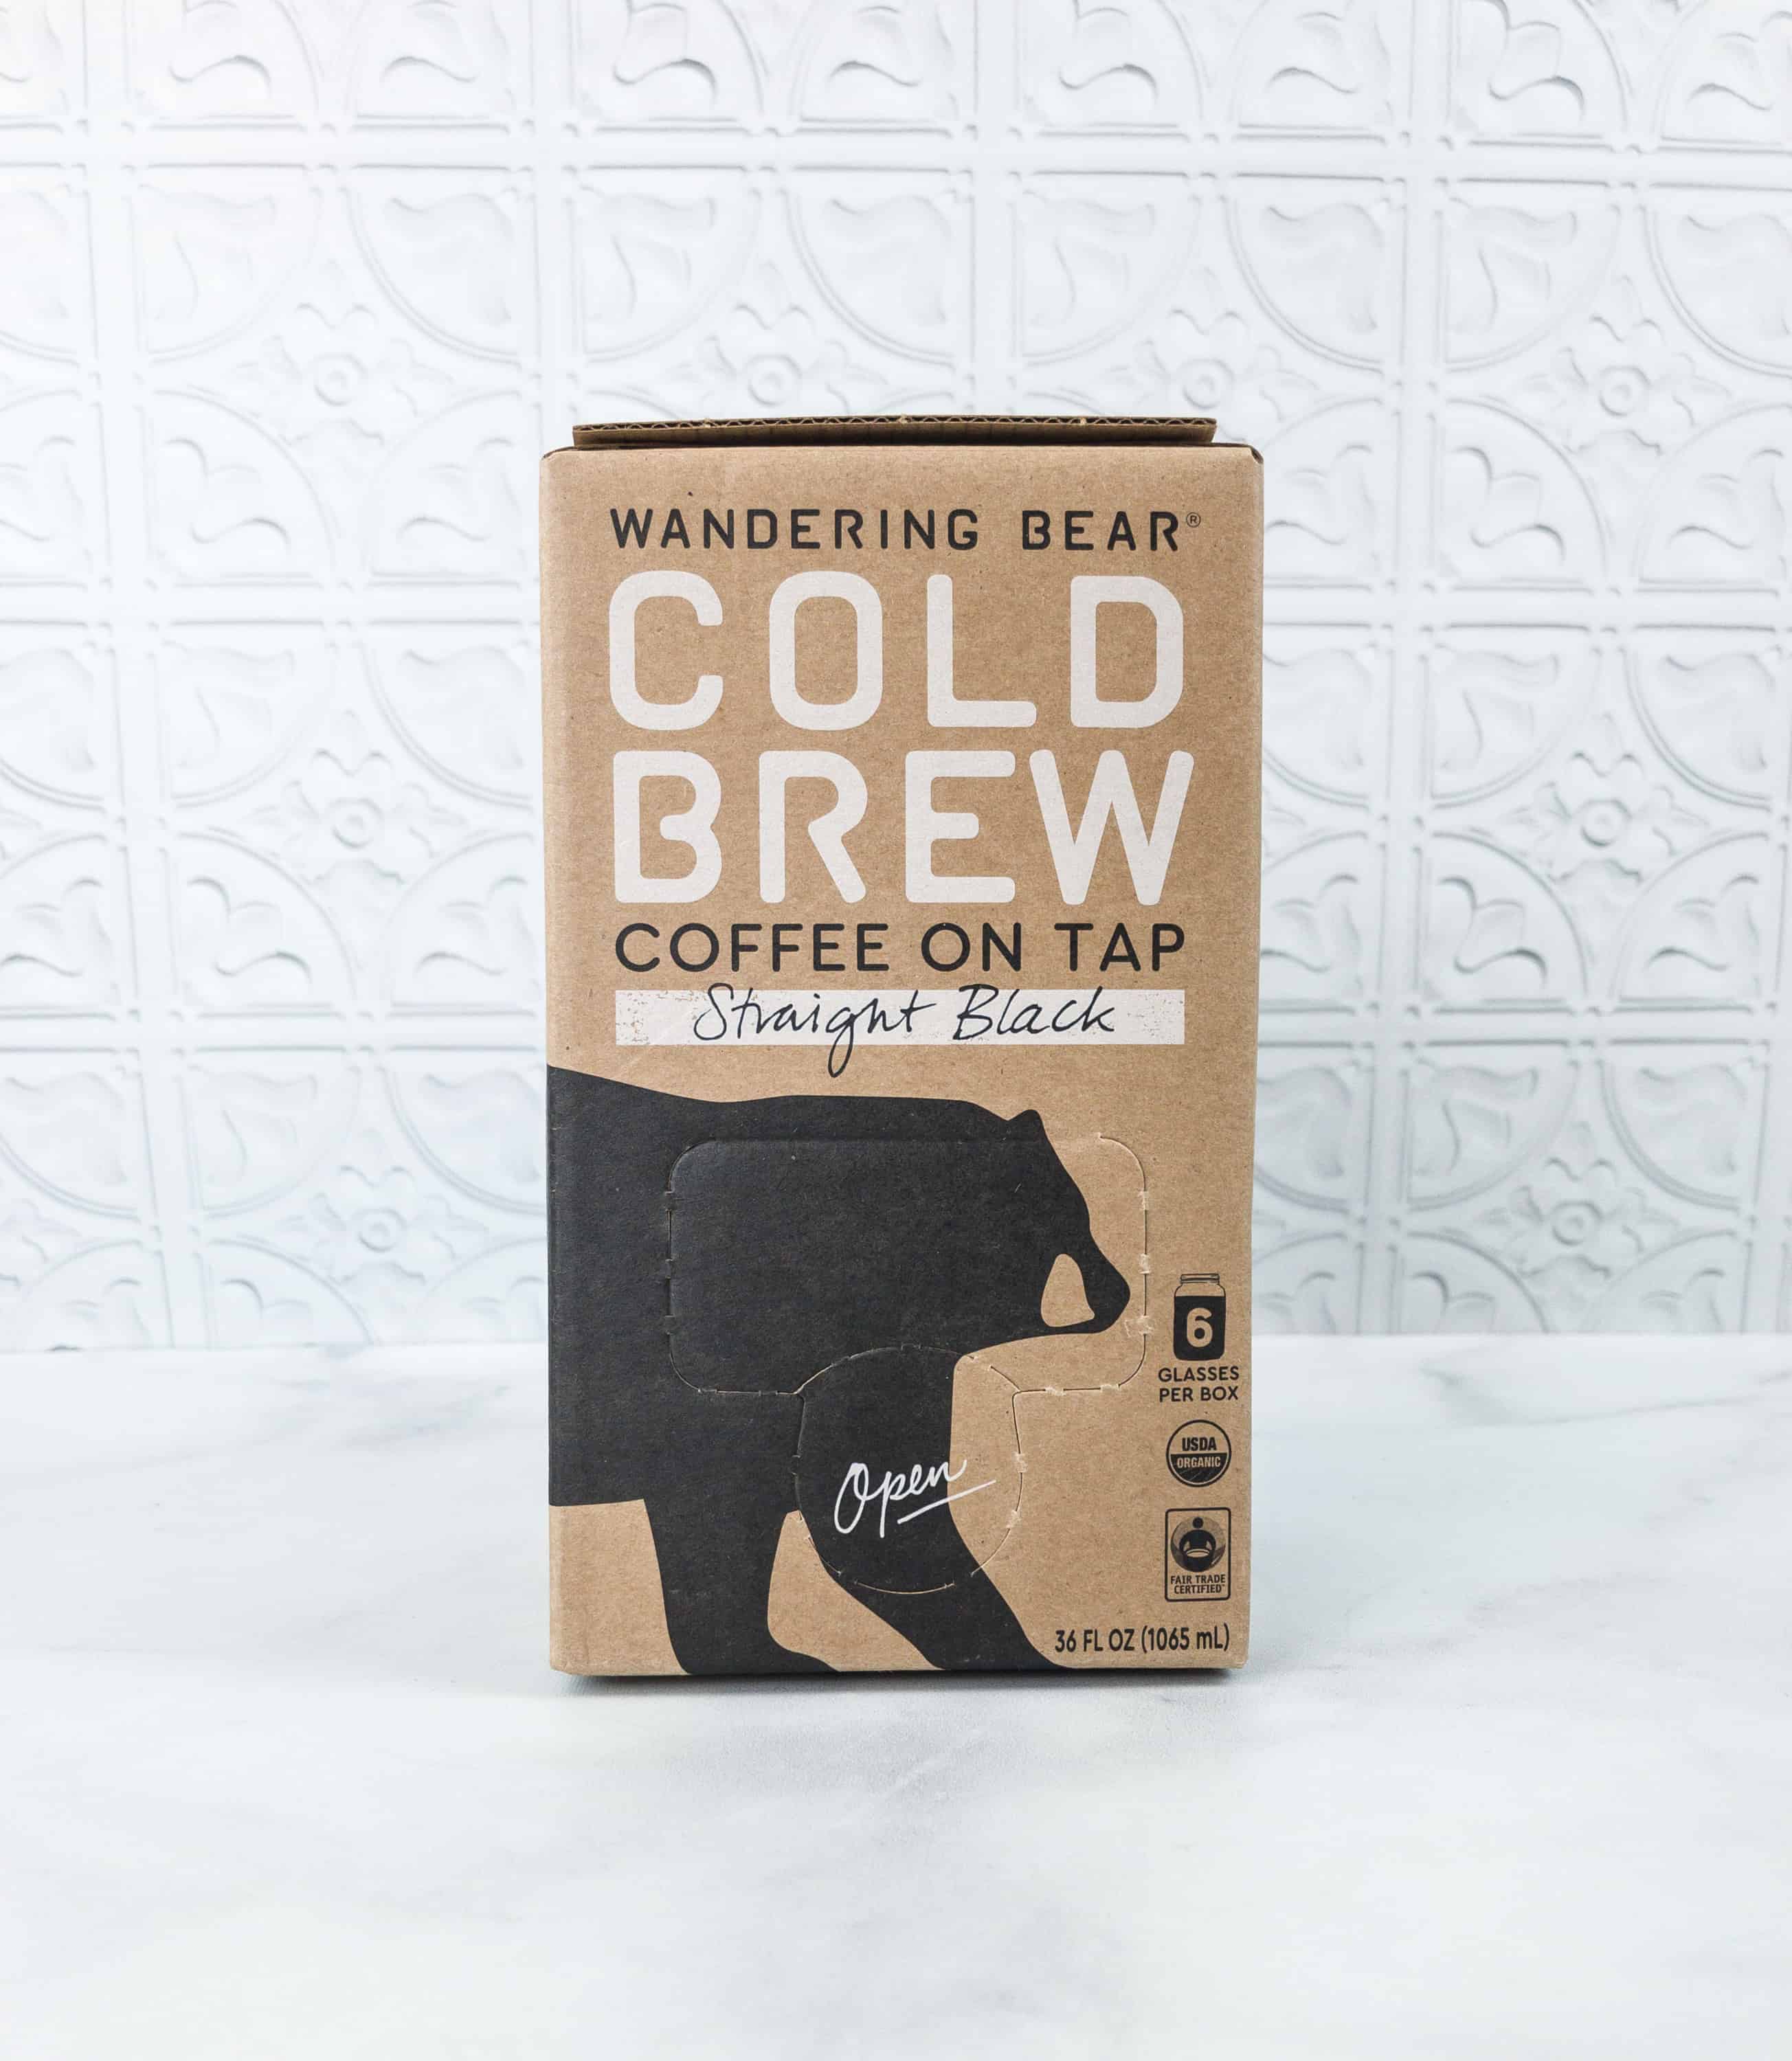 wandering bear coffee box